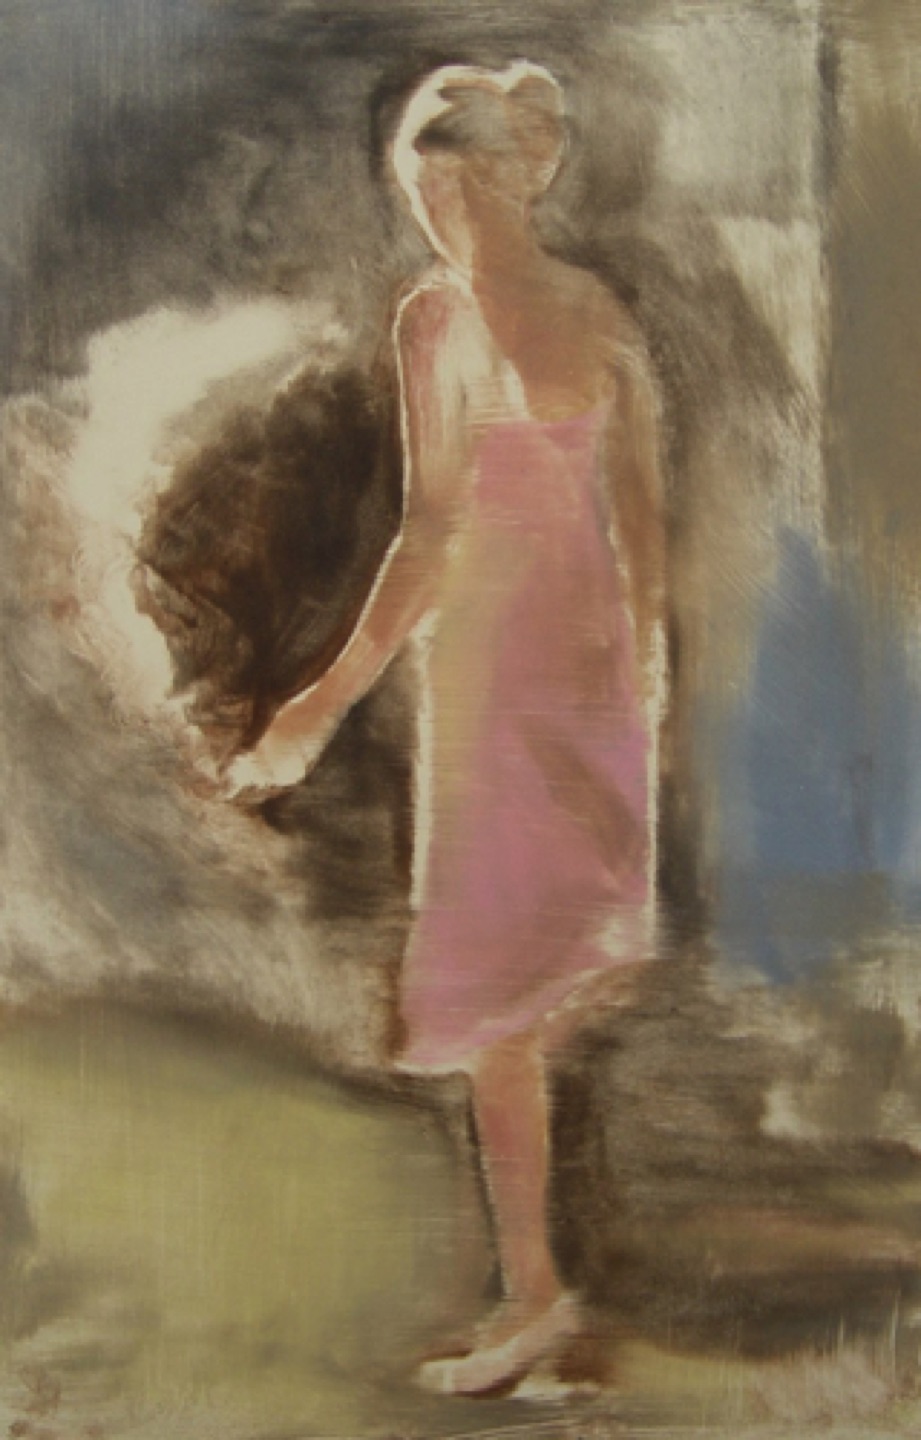 Gregg Chadwick
Rauch Licht (Smoke Light)
30”x22” monotype on paper 2011